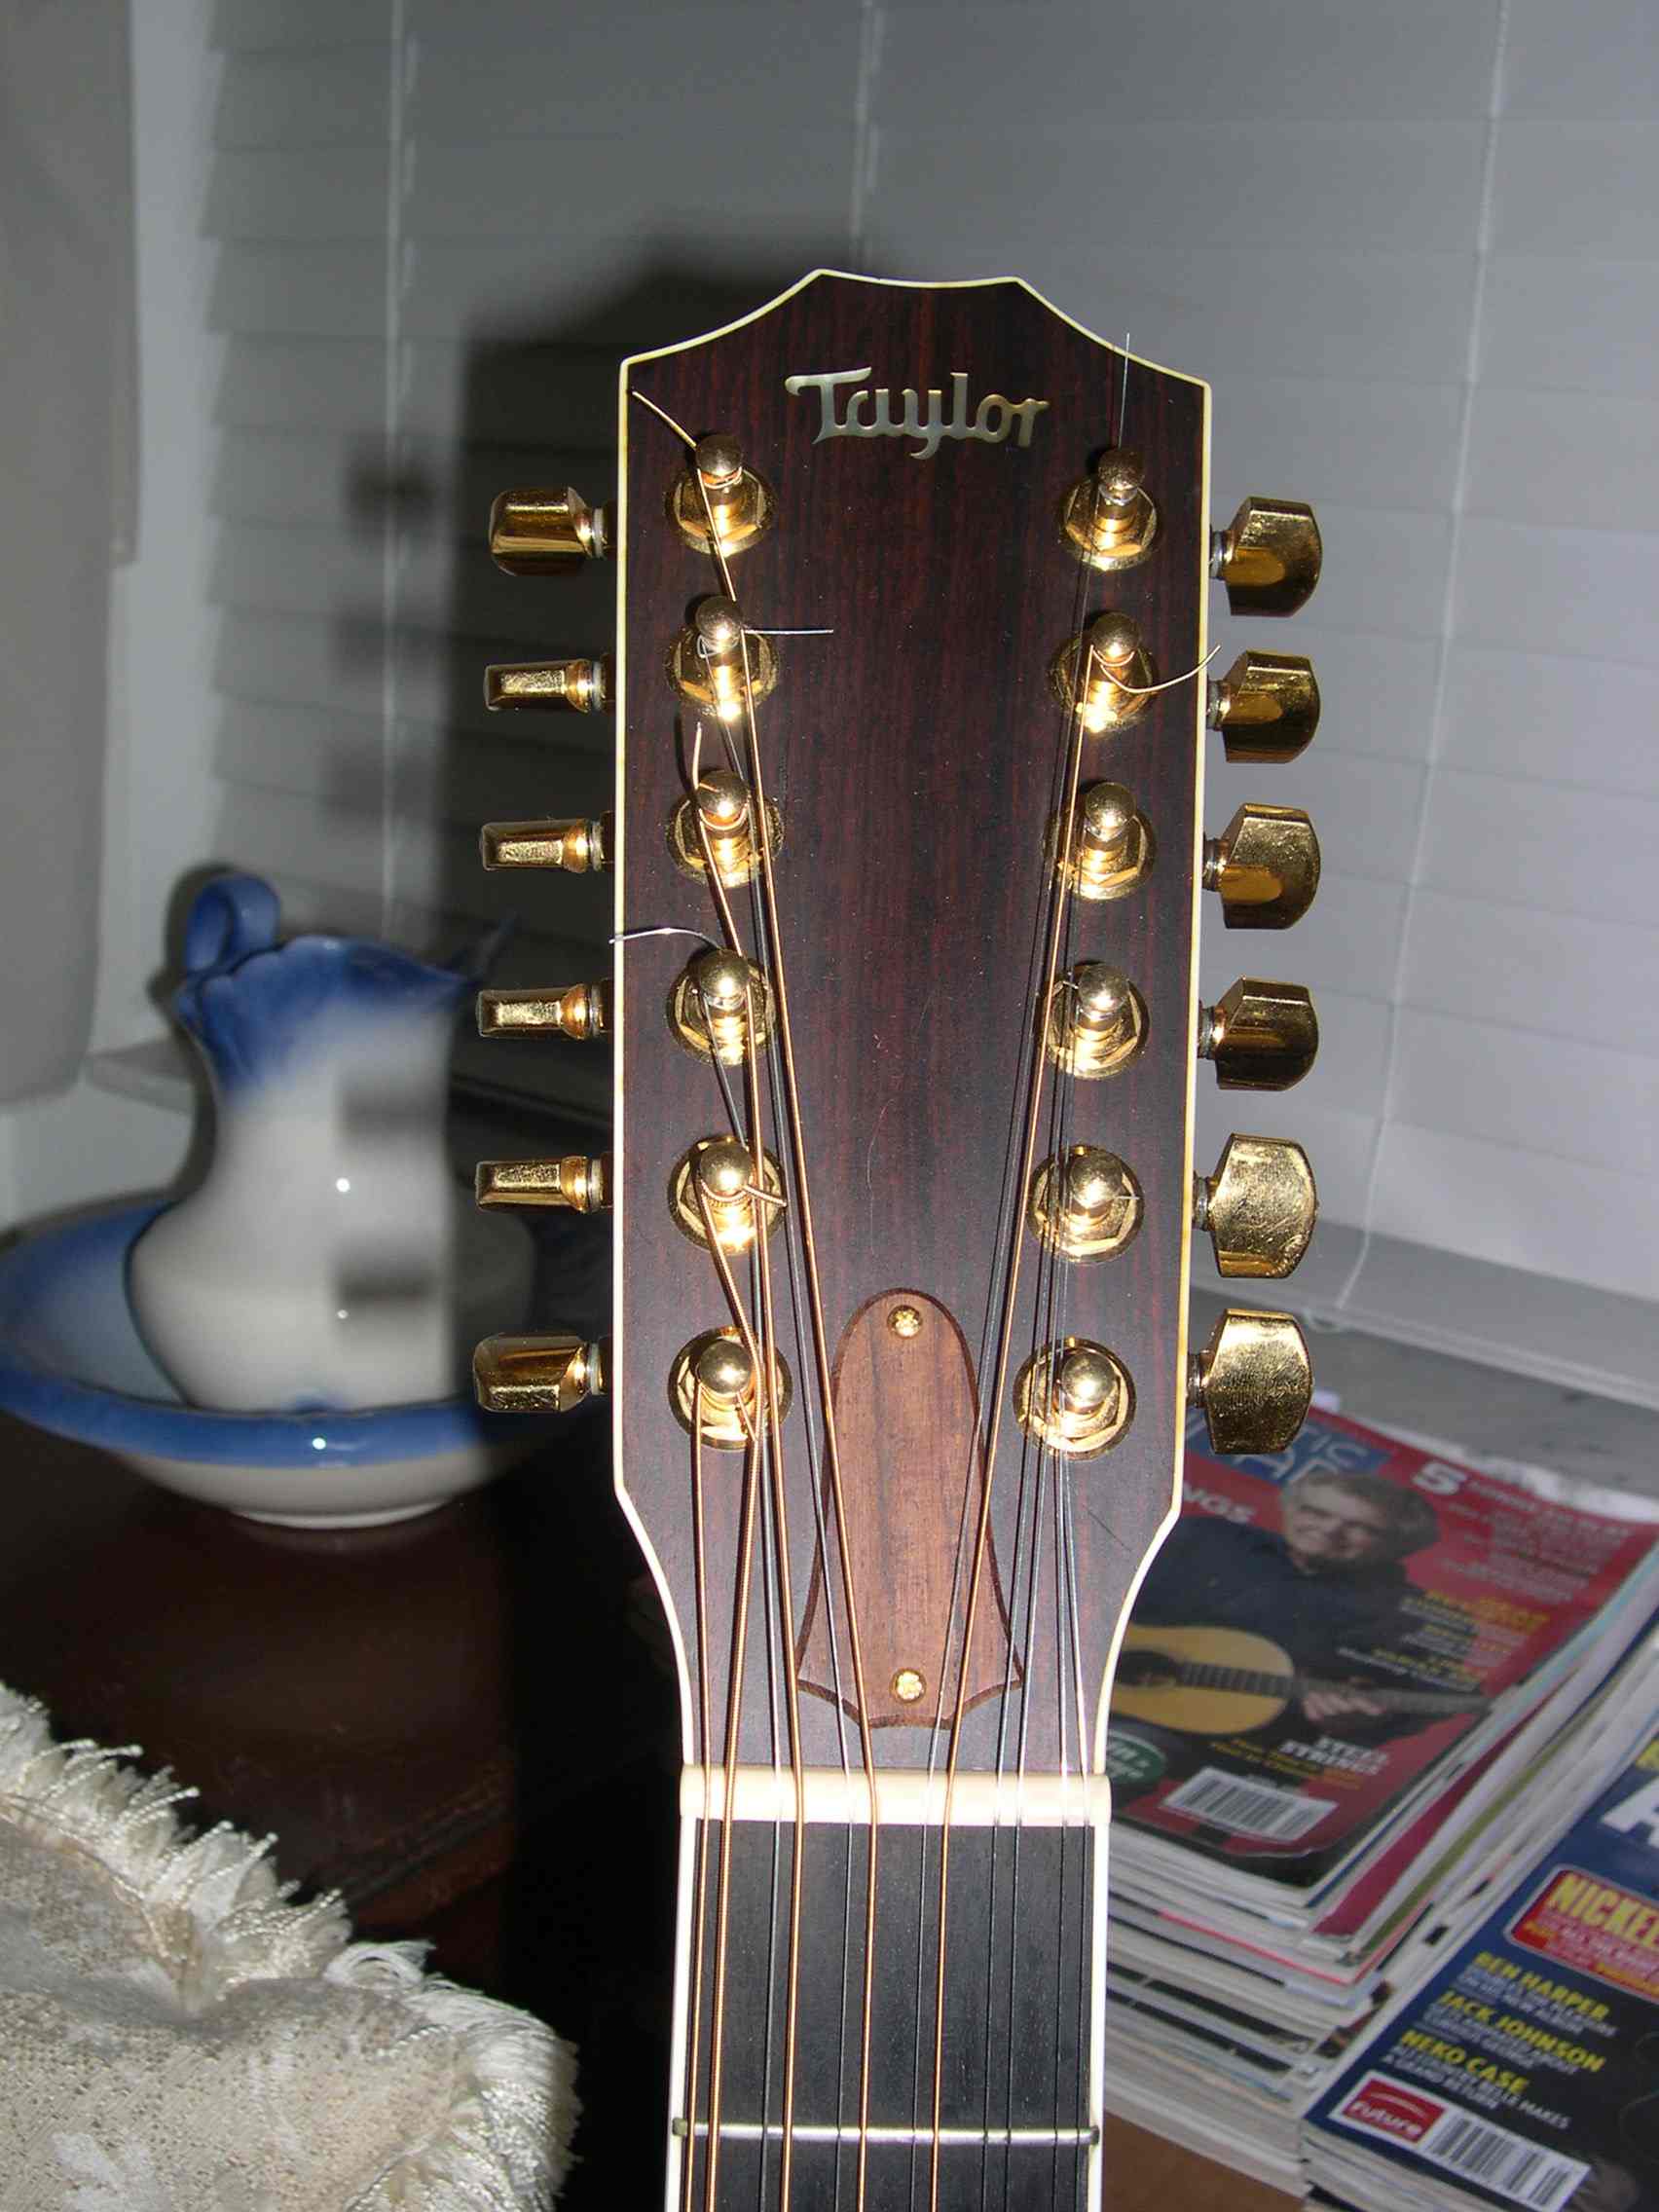 1992 Taylor 855 Strings